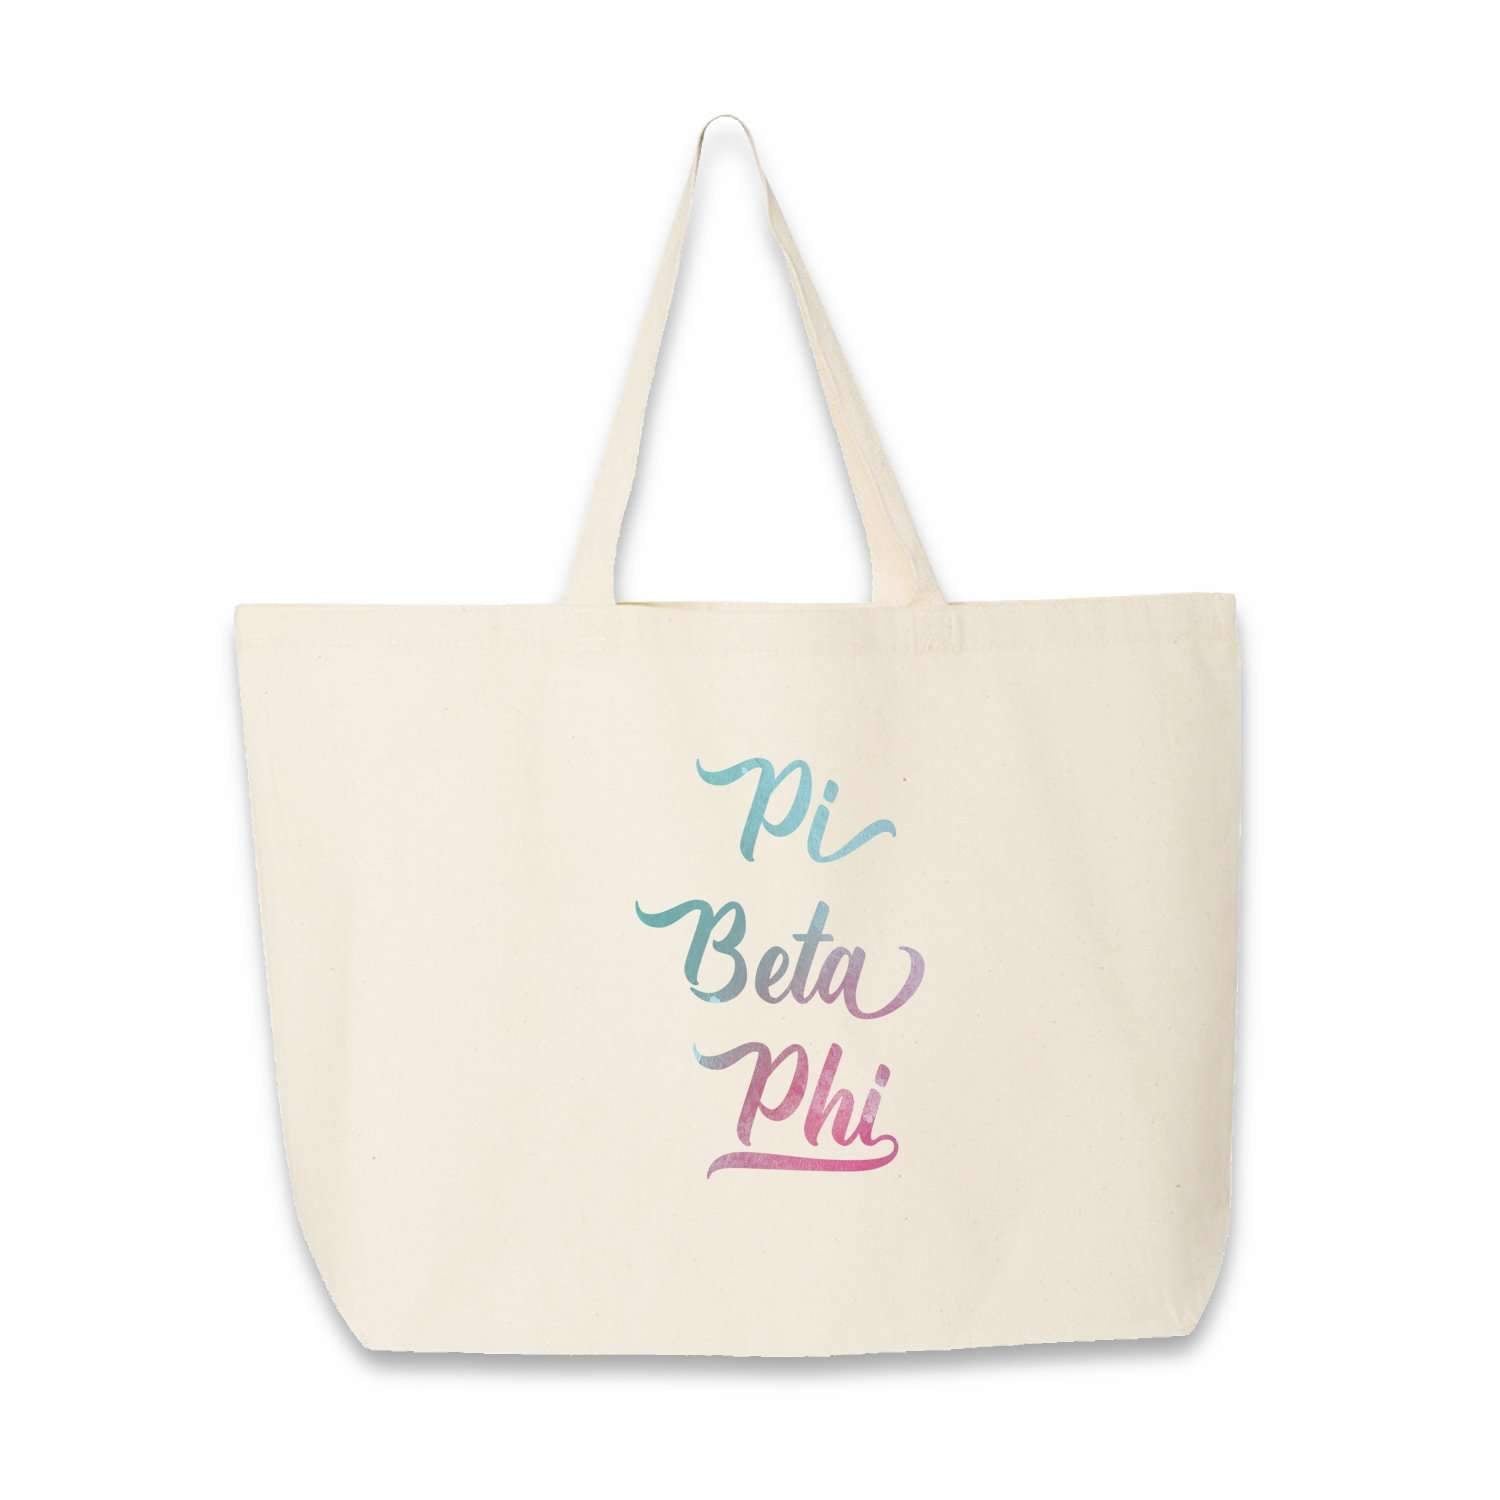 Pi Beta Phi sorority name custom printed on canvas tote bag